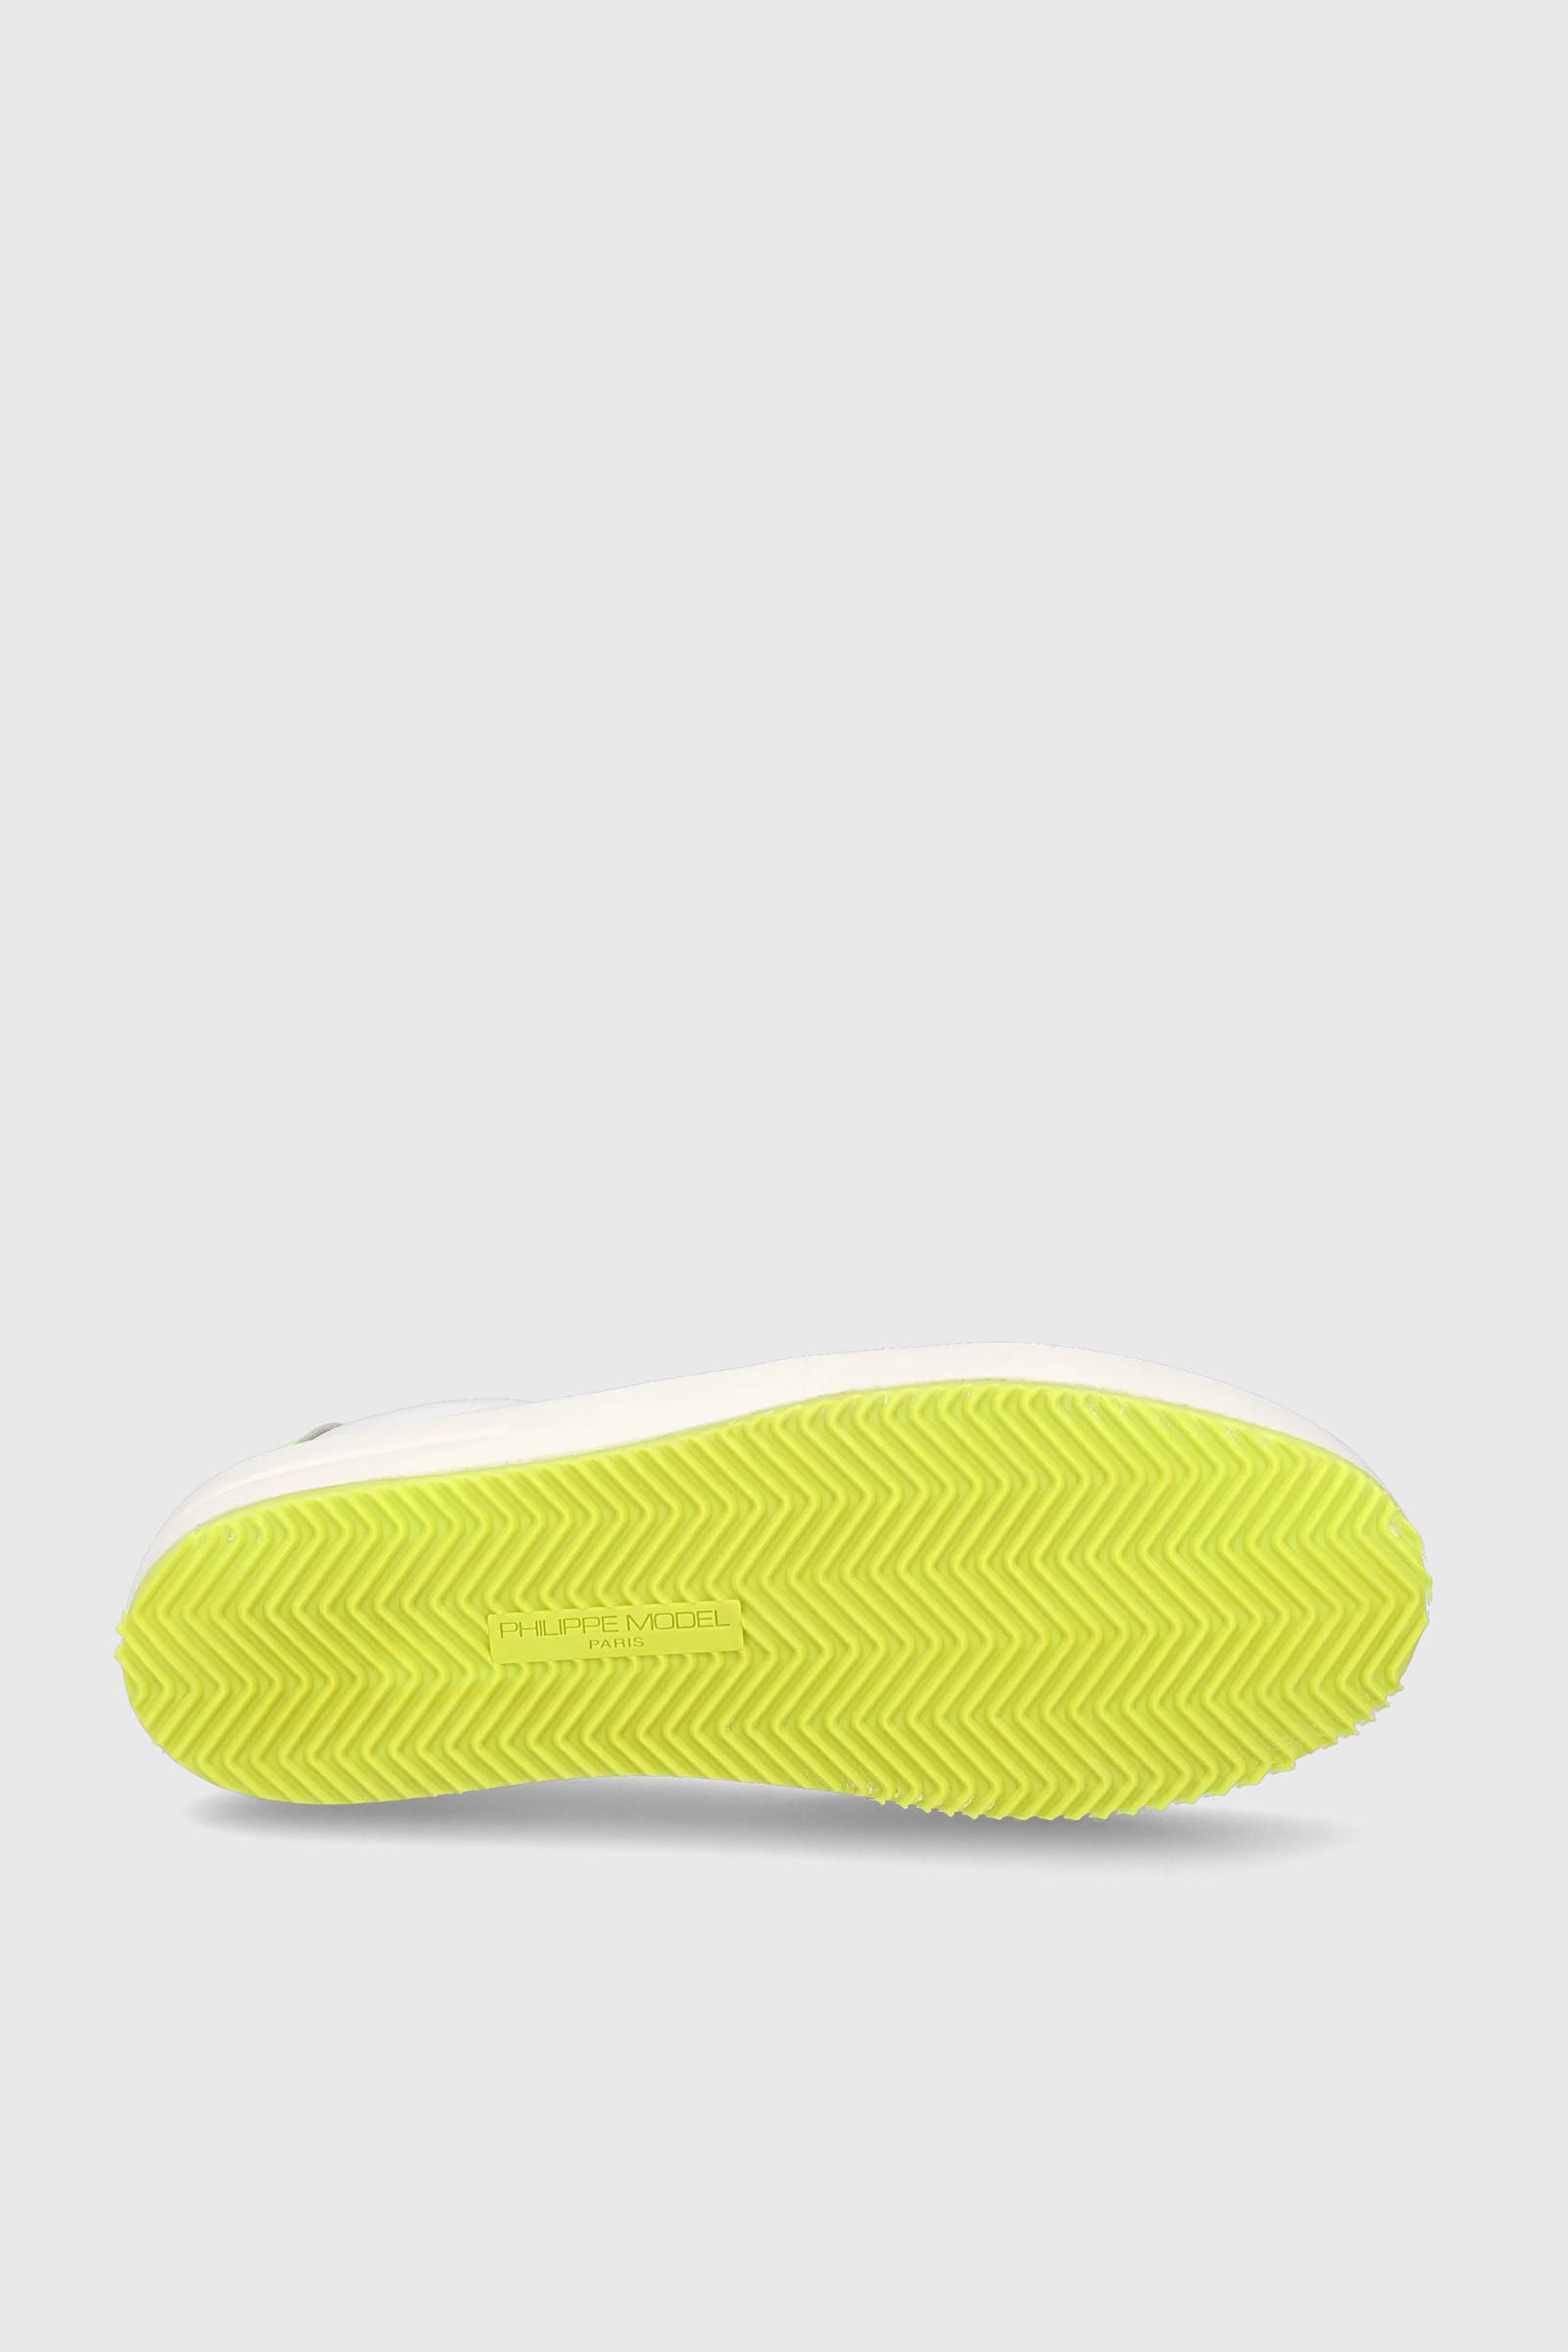 Philippe Model Sneaker Nice Veau Pelle Bianco/Giallo Fluo - 5